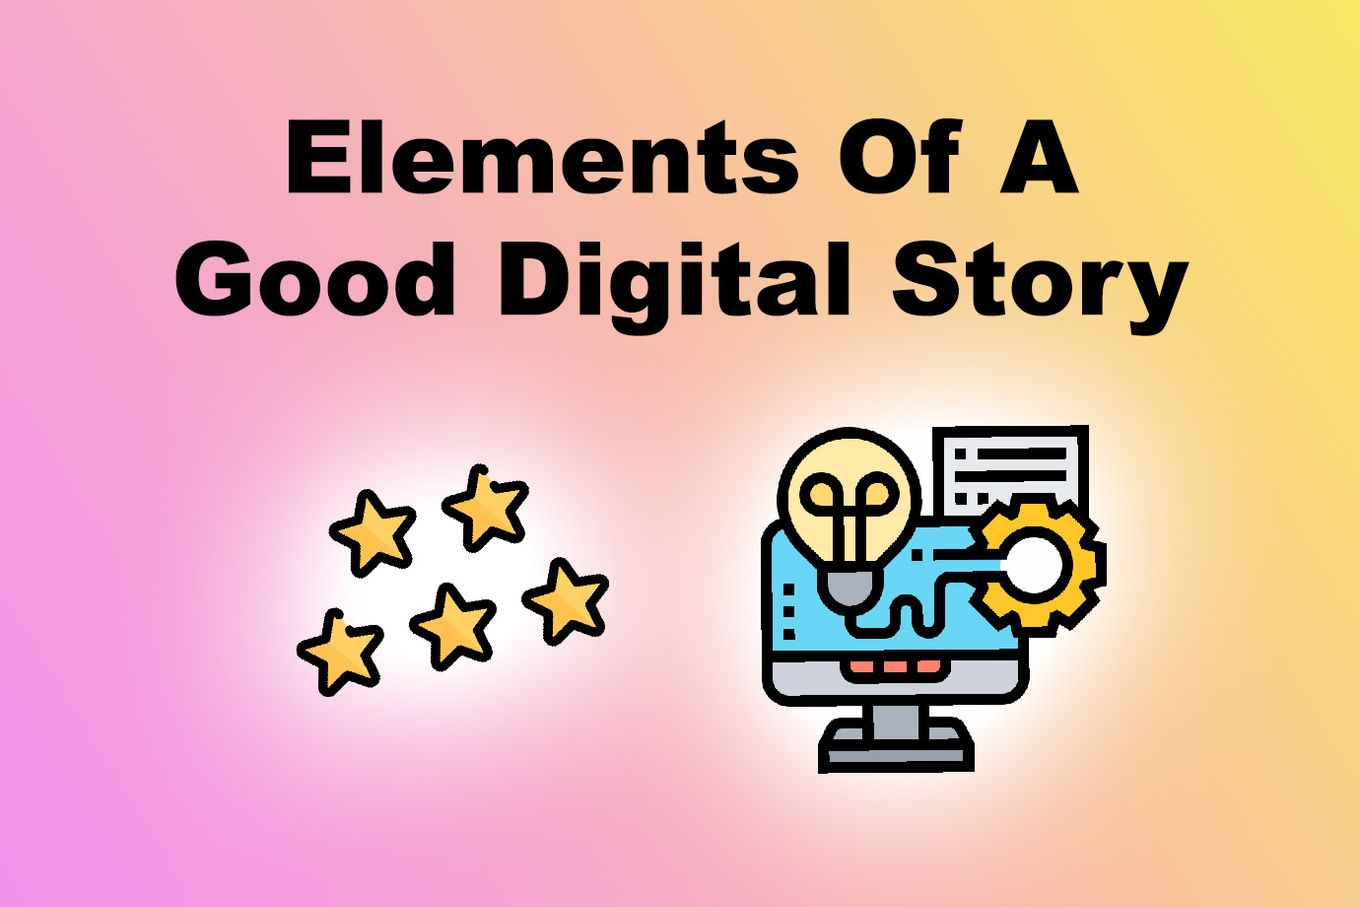 Elements of a good digital story